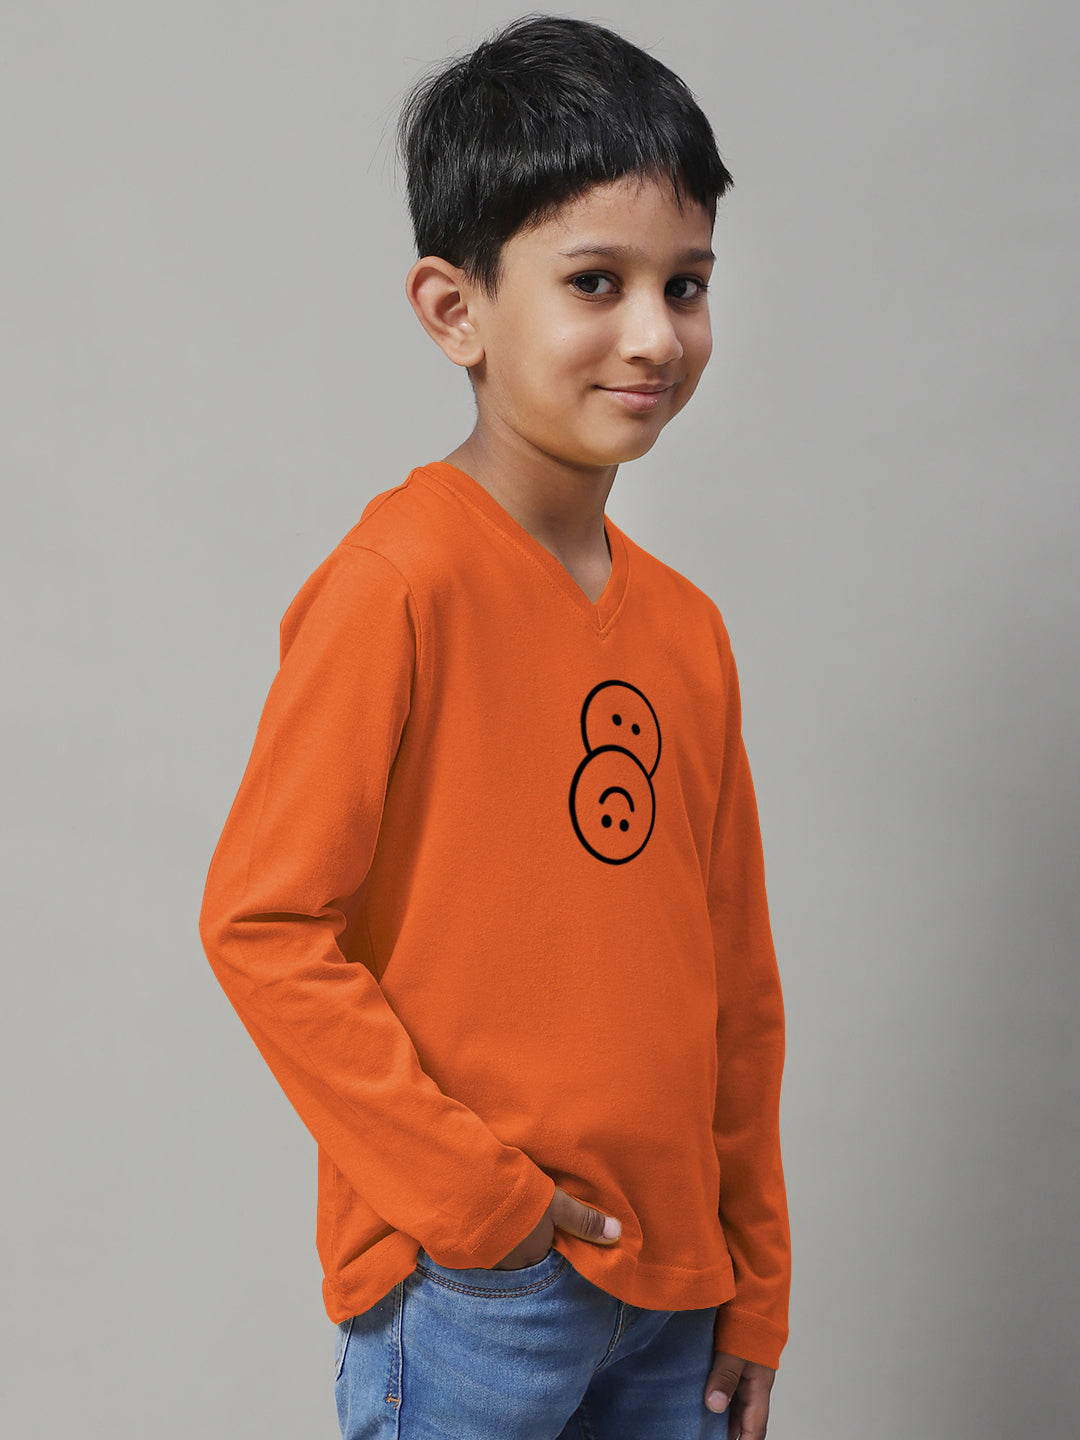 Boys Smiley Full Sleeves Printed T-Shirt - Friskers